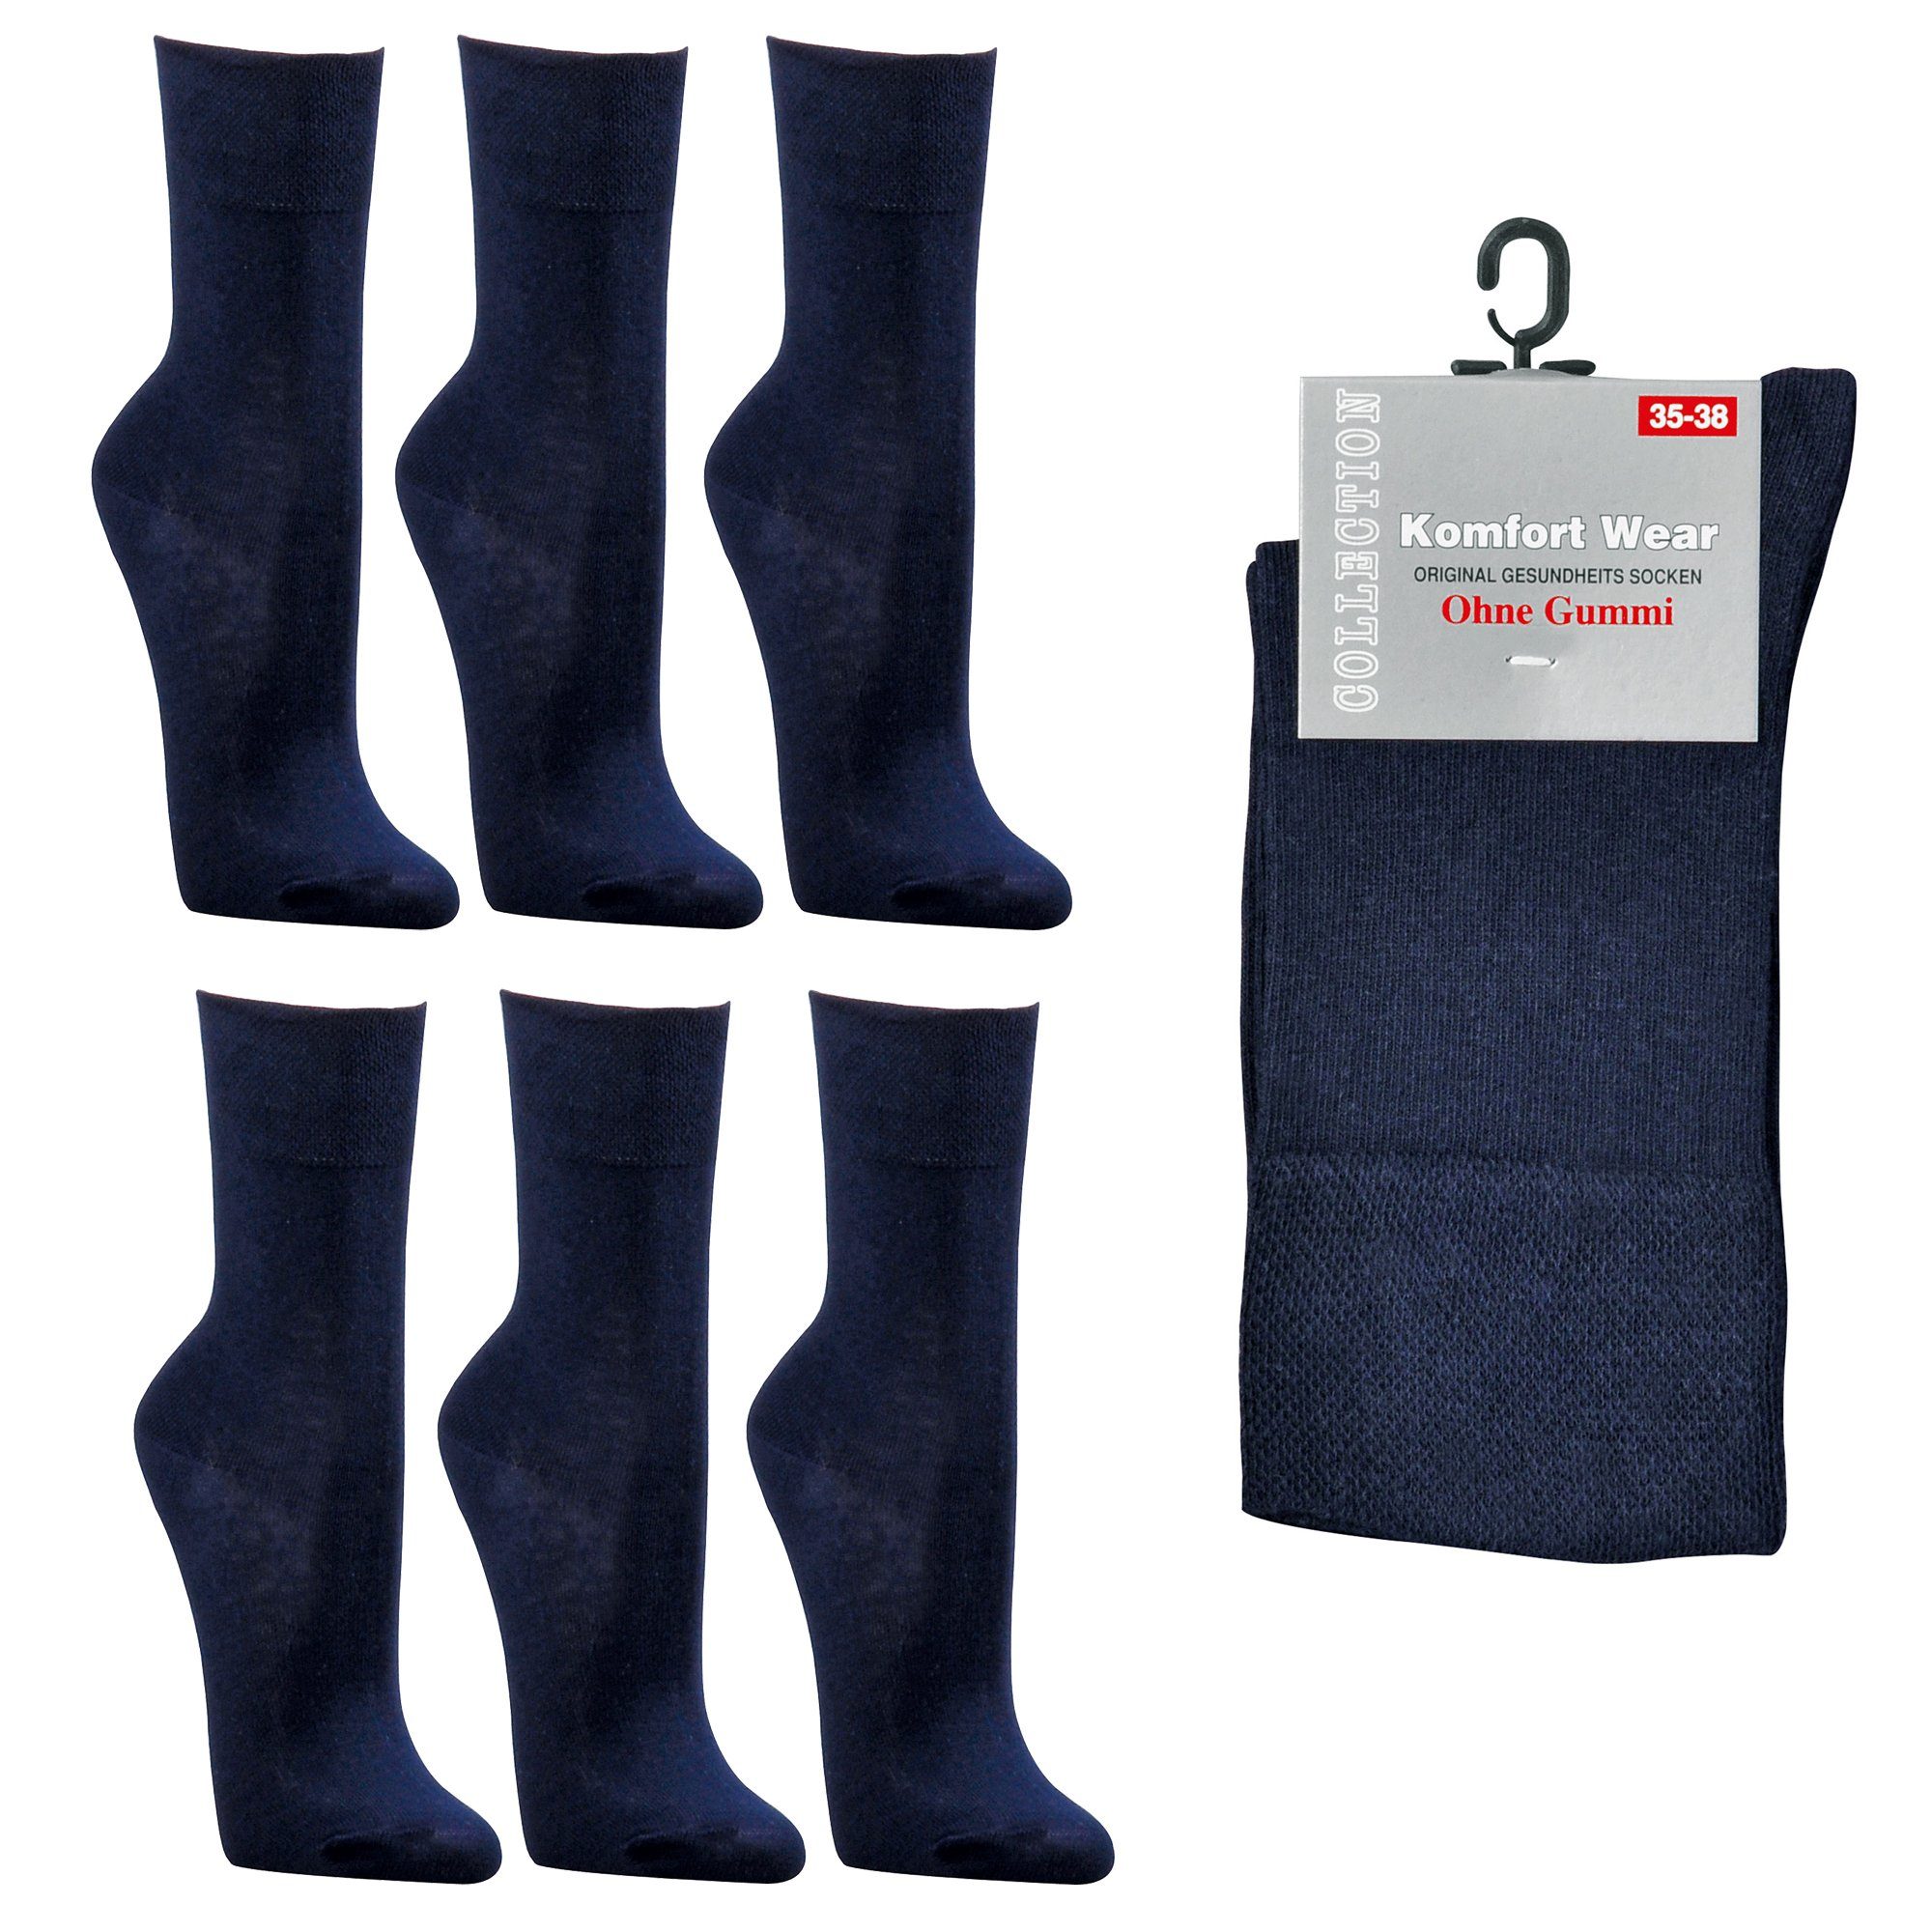 Socks 4 Fun Langsocken 2162 (Packung, 6-Paar, 6 Paar) Wellness-Socken ohne Gummidruck Herren Damen Socken Komfortbund marine | Socken